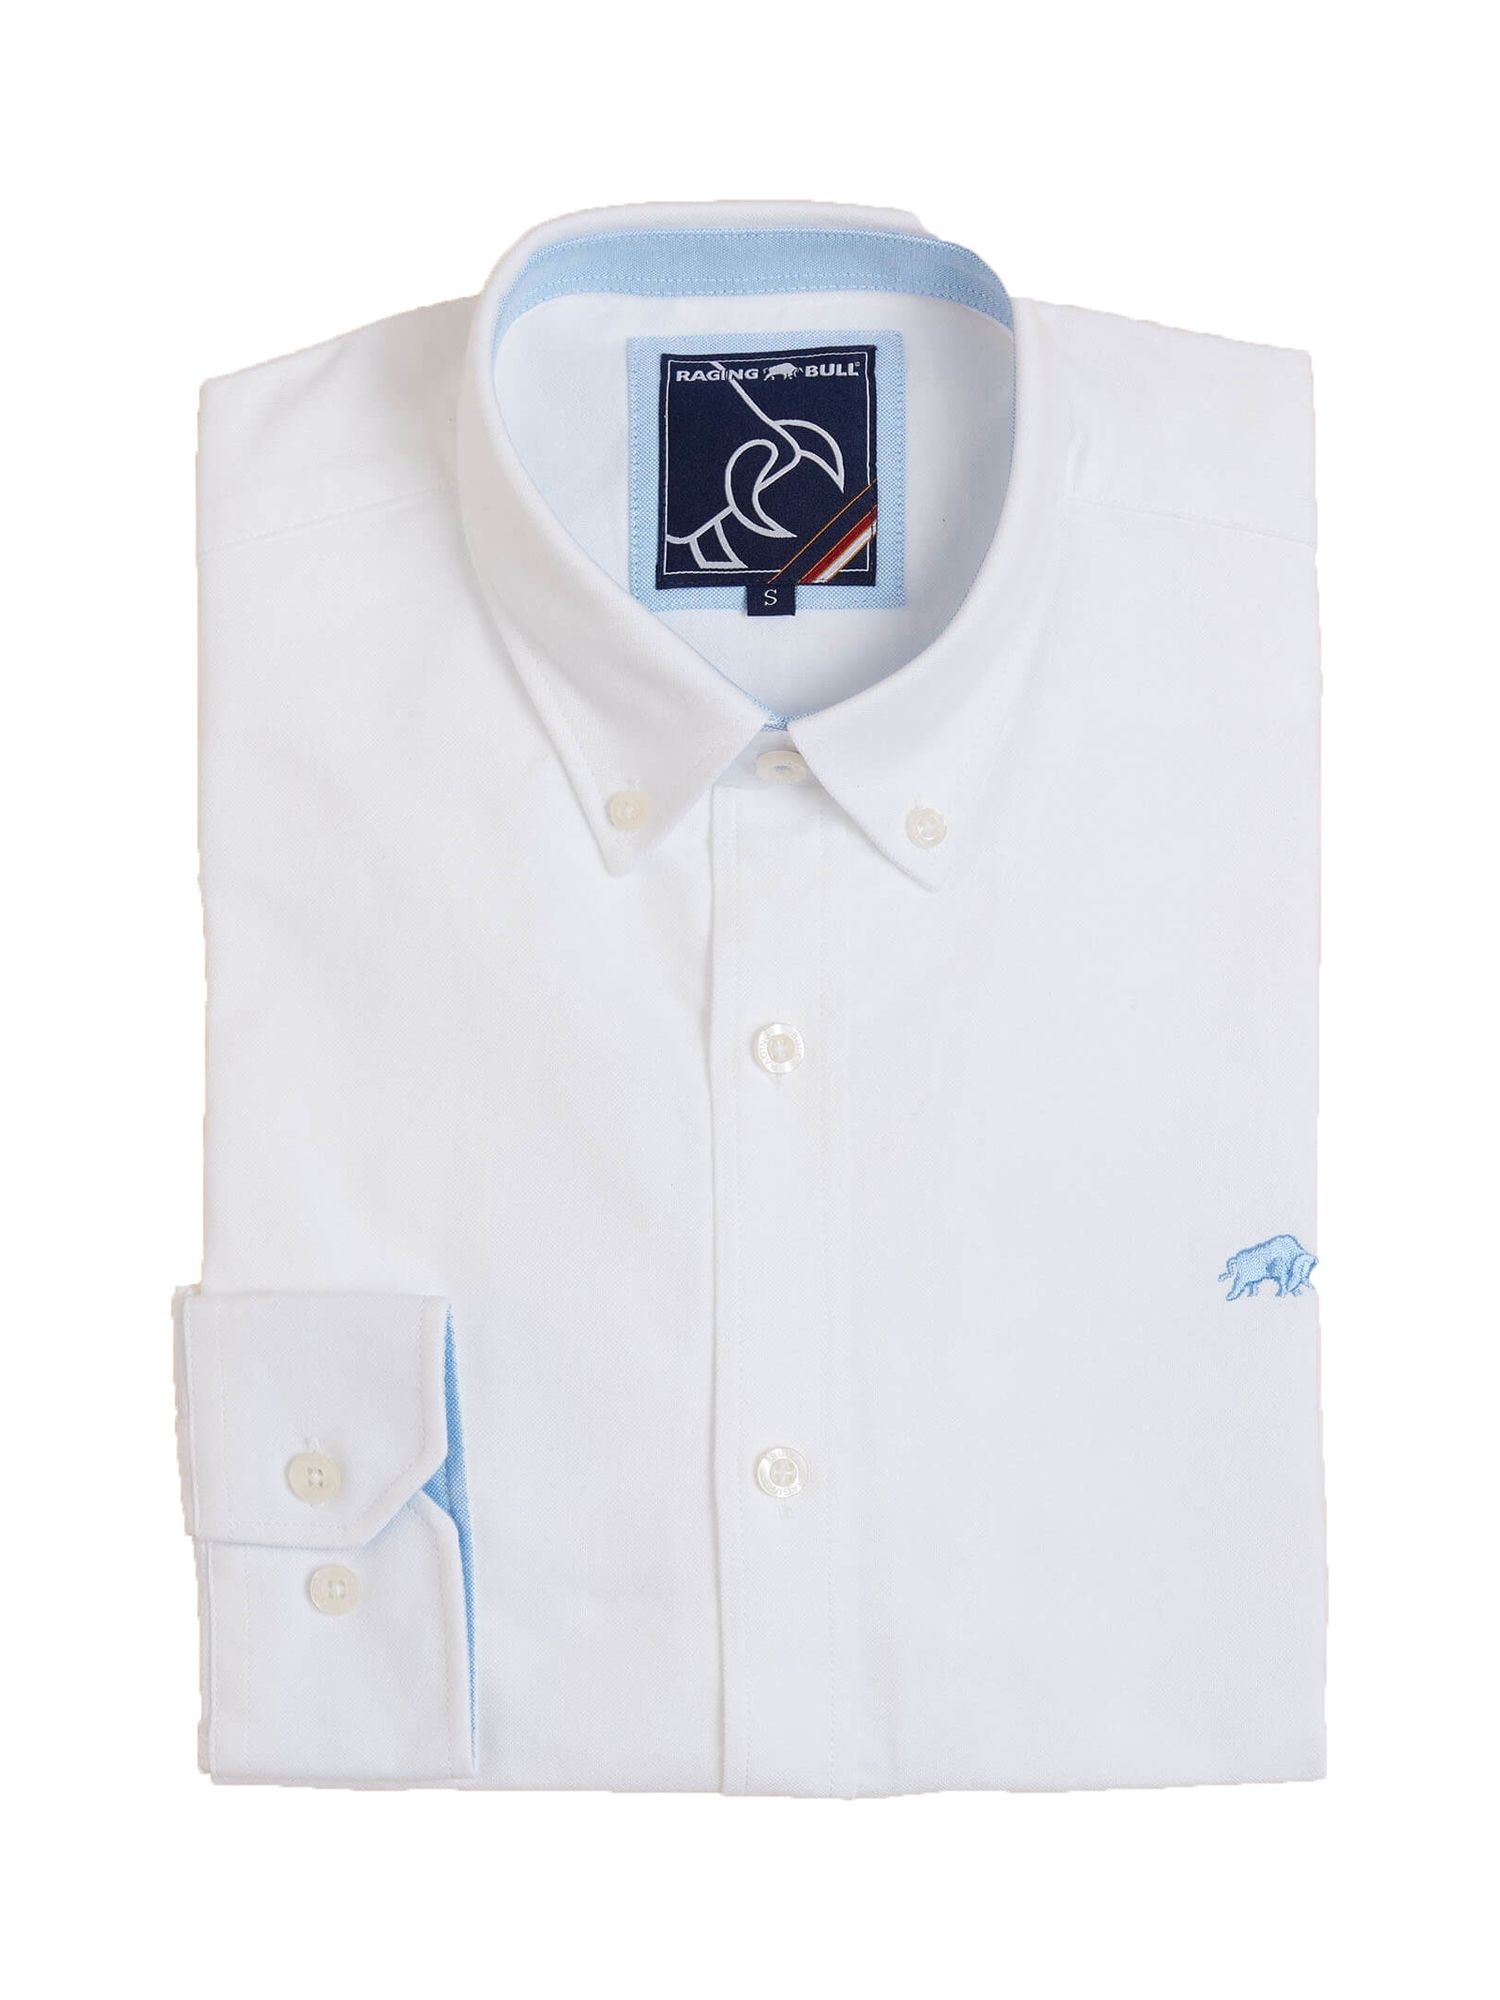 Raging Bull Classic Oxford Shirt, White, S